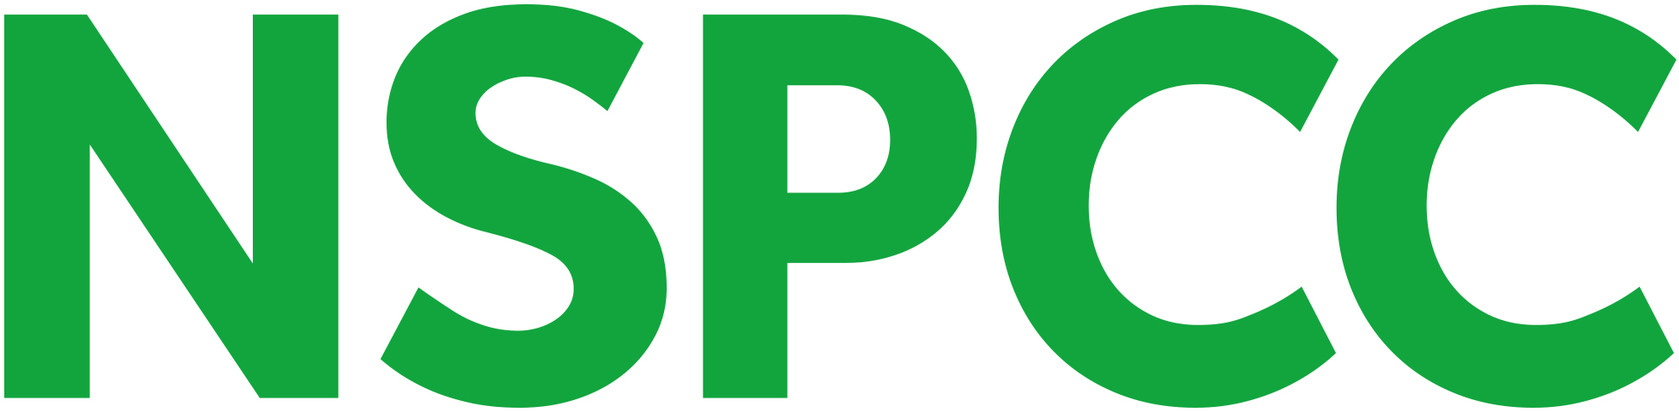 Nspcc Logo Colour Foronline